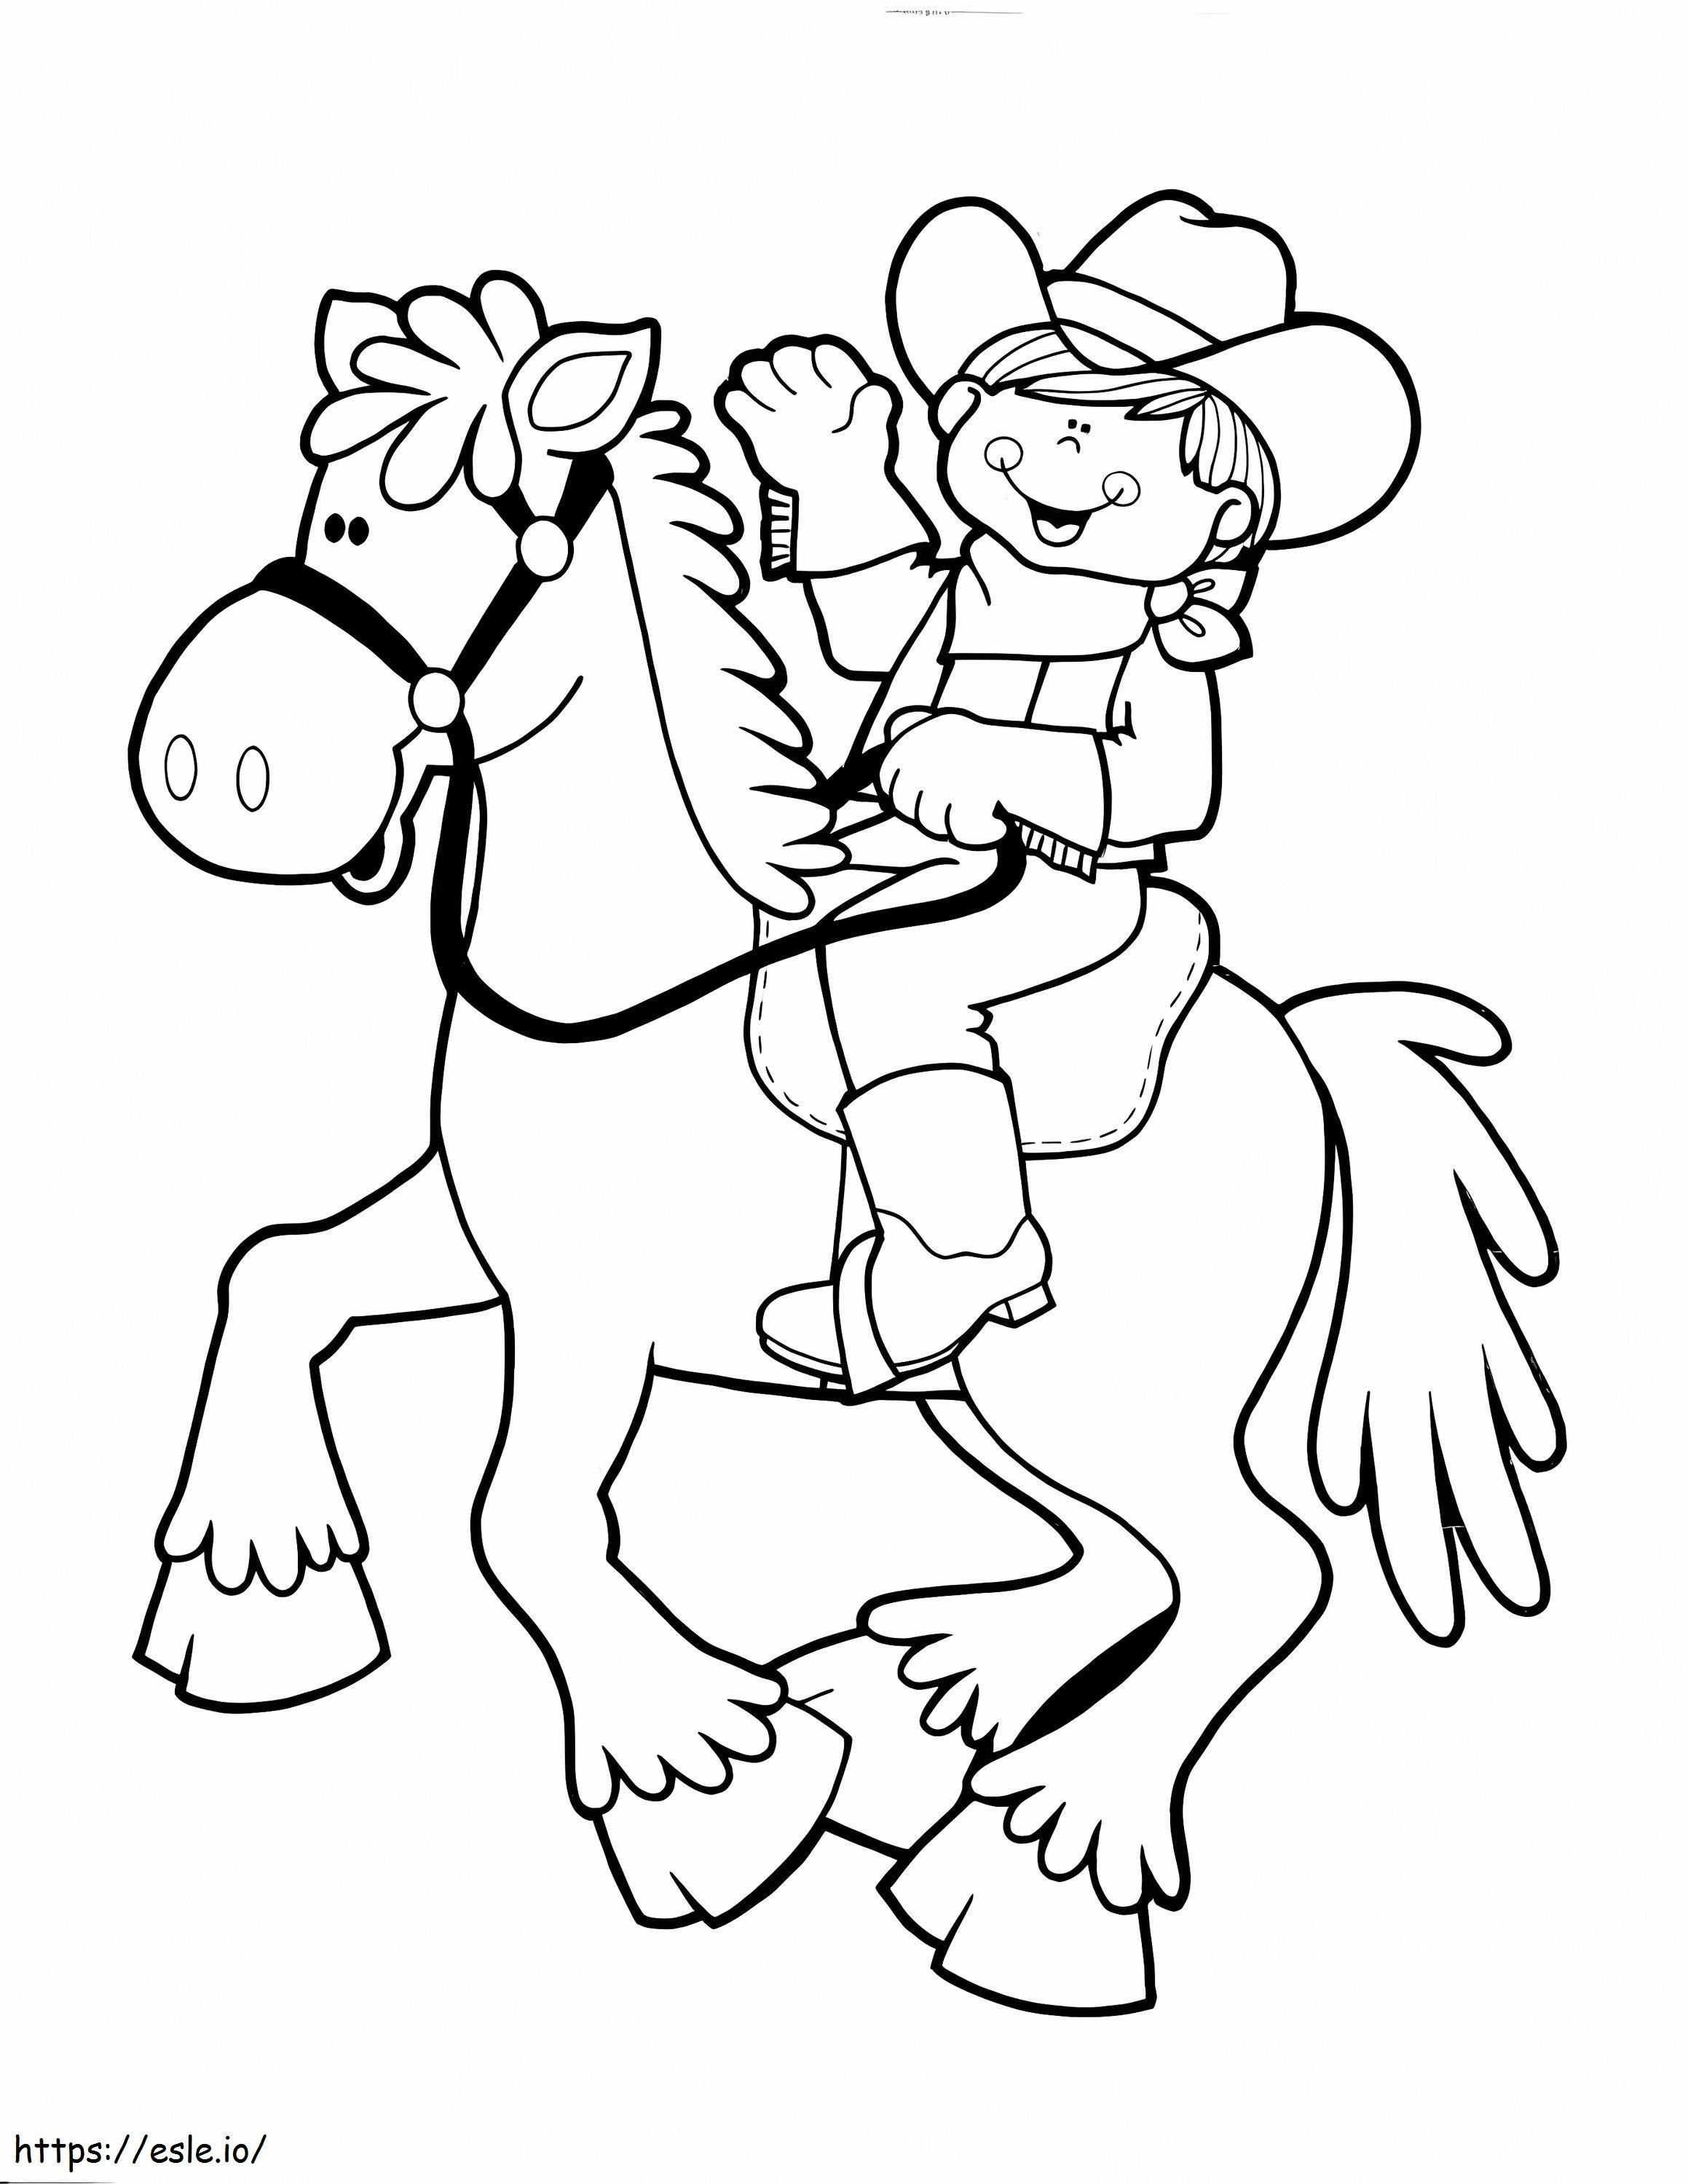 Boy Cowboy Riding Horse coloring page